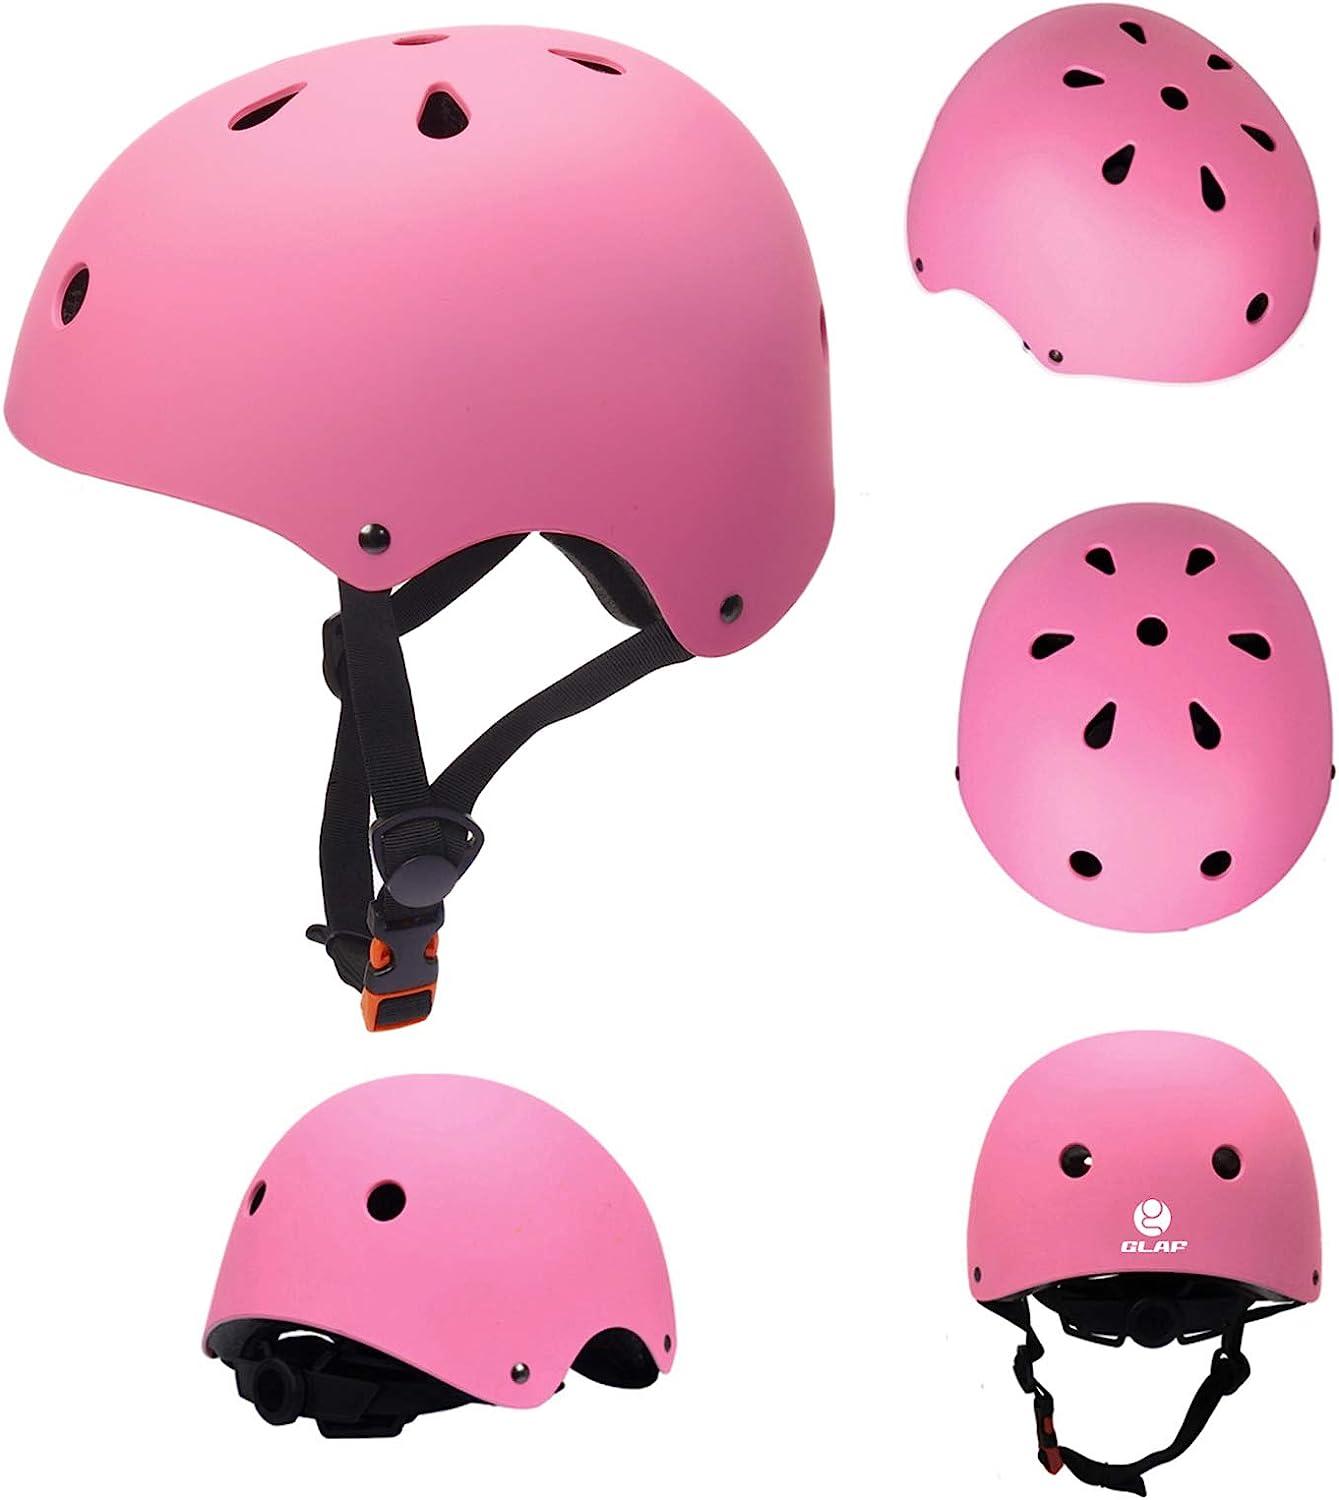 Dubkart Adjustable Toddler Kids Helmet for Ages 5-8 Years Boys